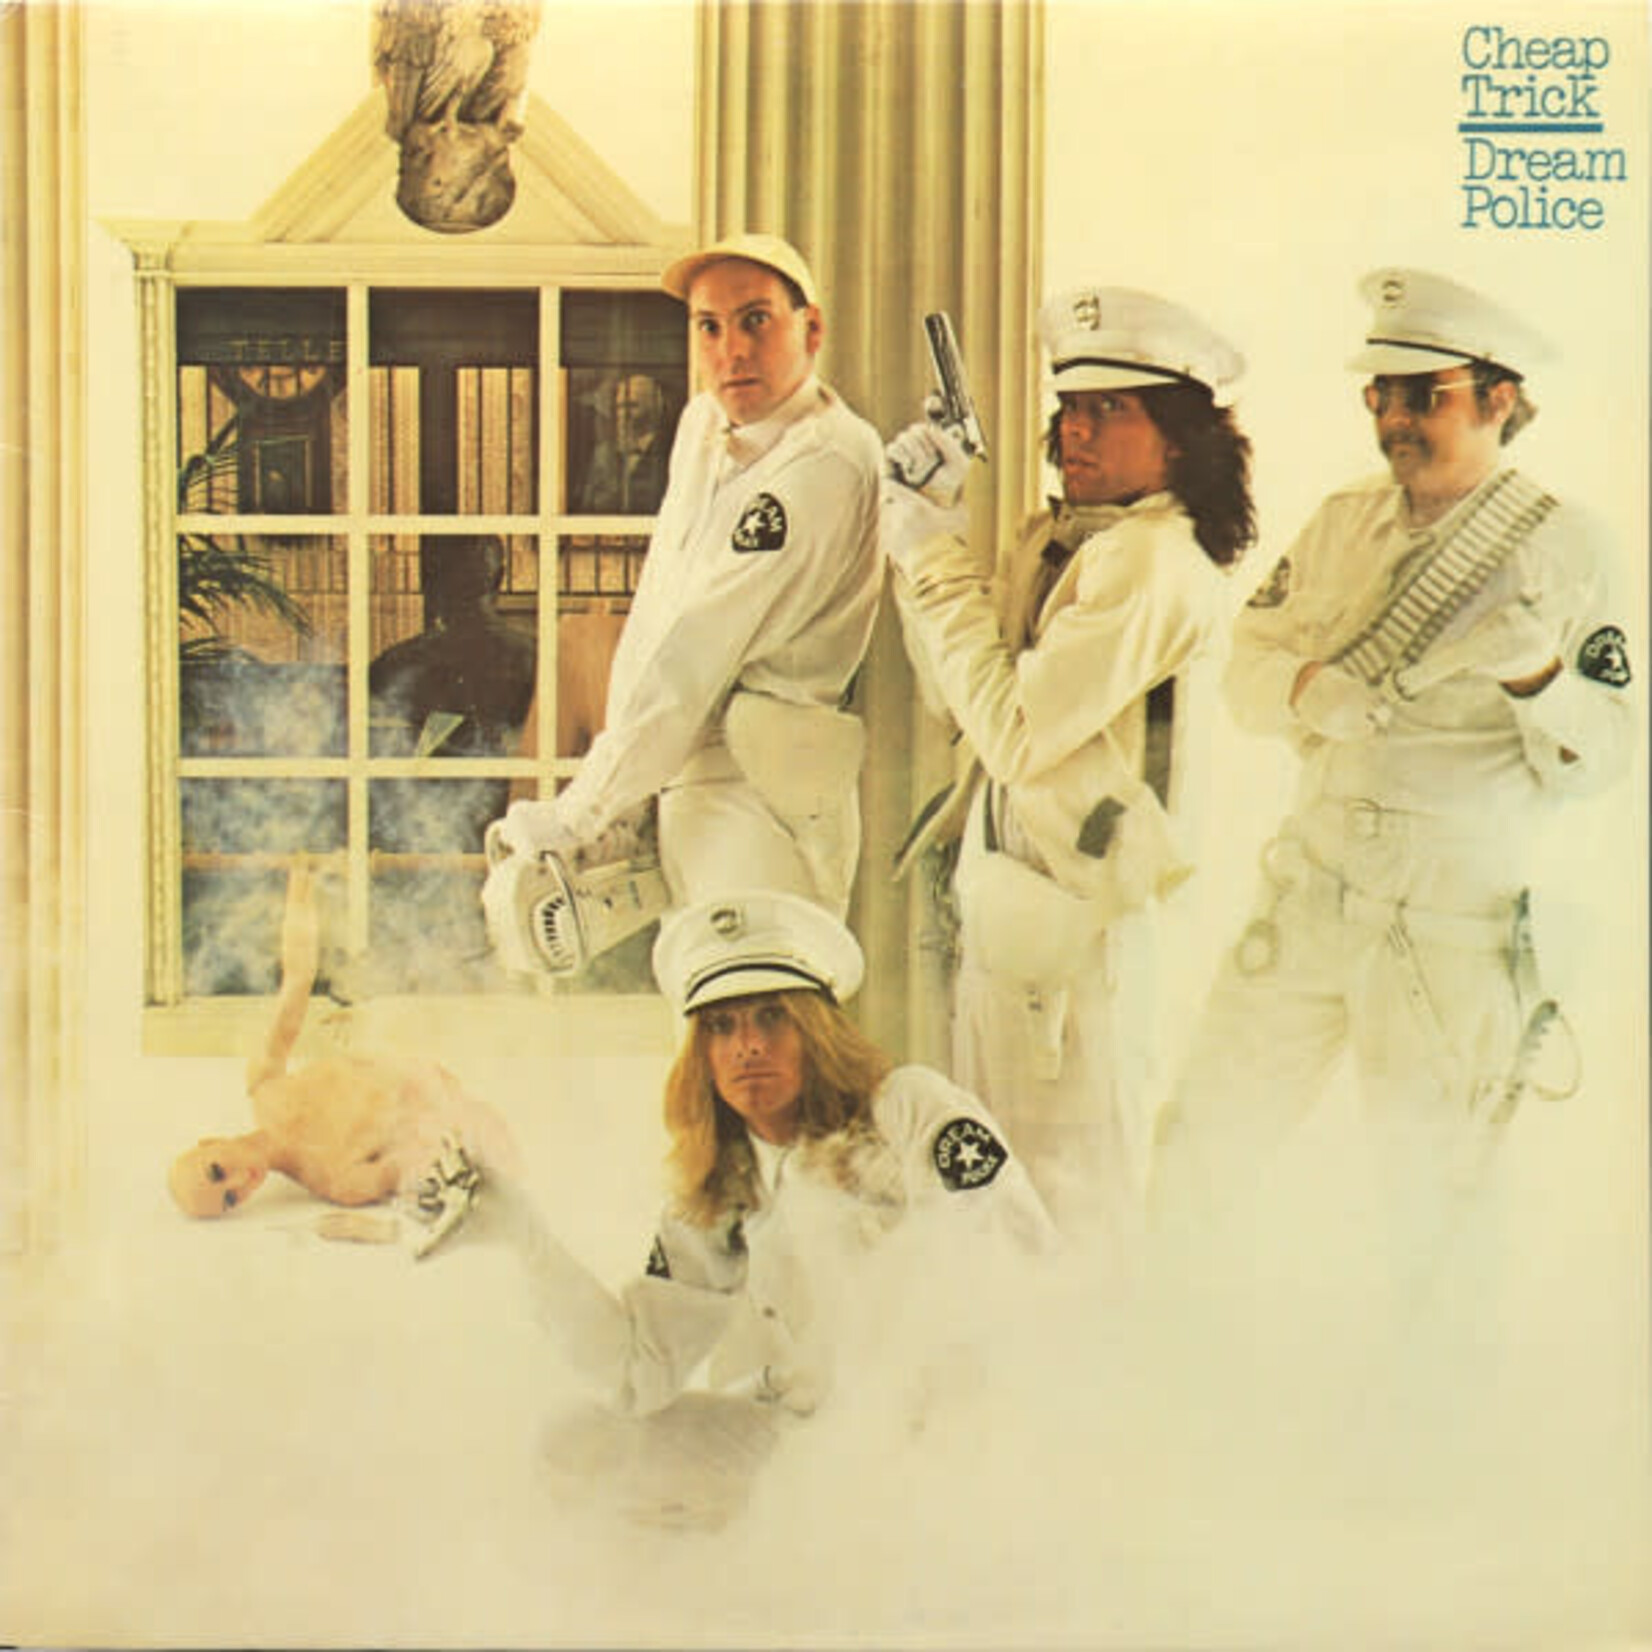 Cheap Trick Cheap Trick – Dream Police (VG, 1979, LP, Epic – FE 35773)